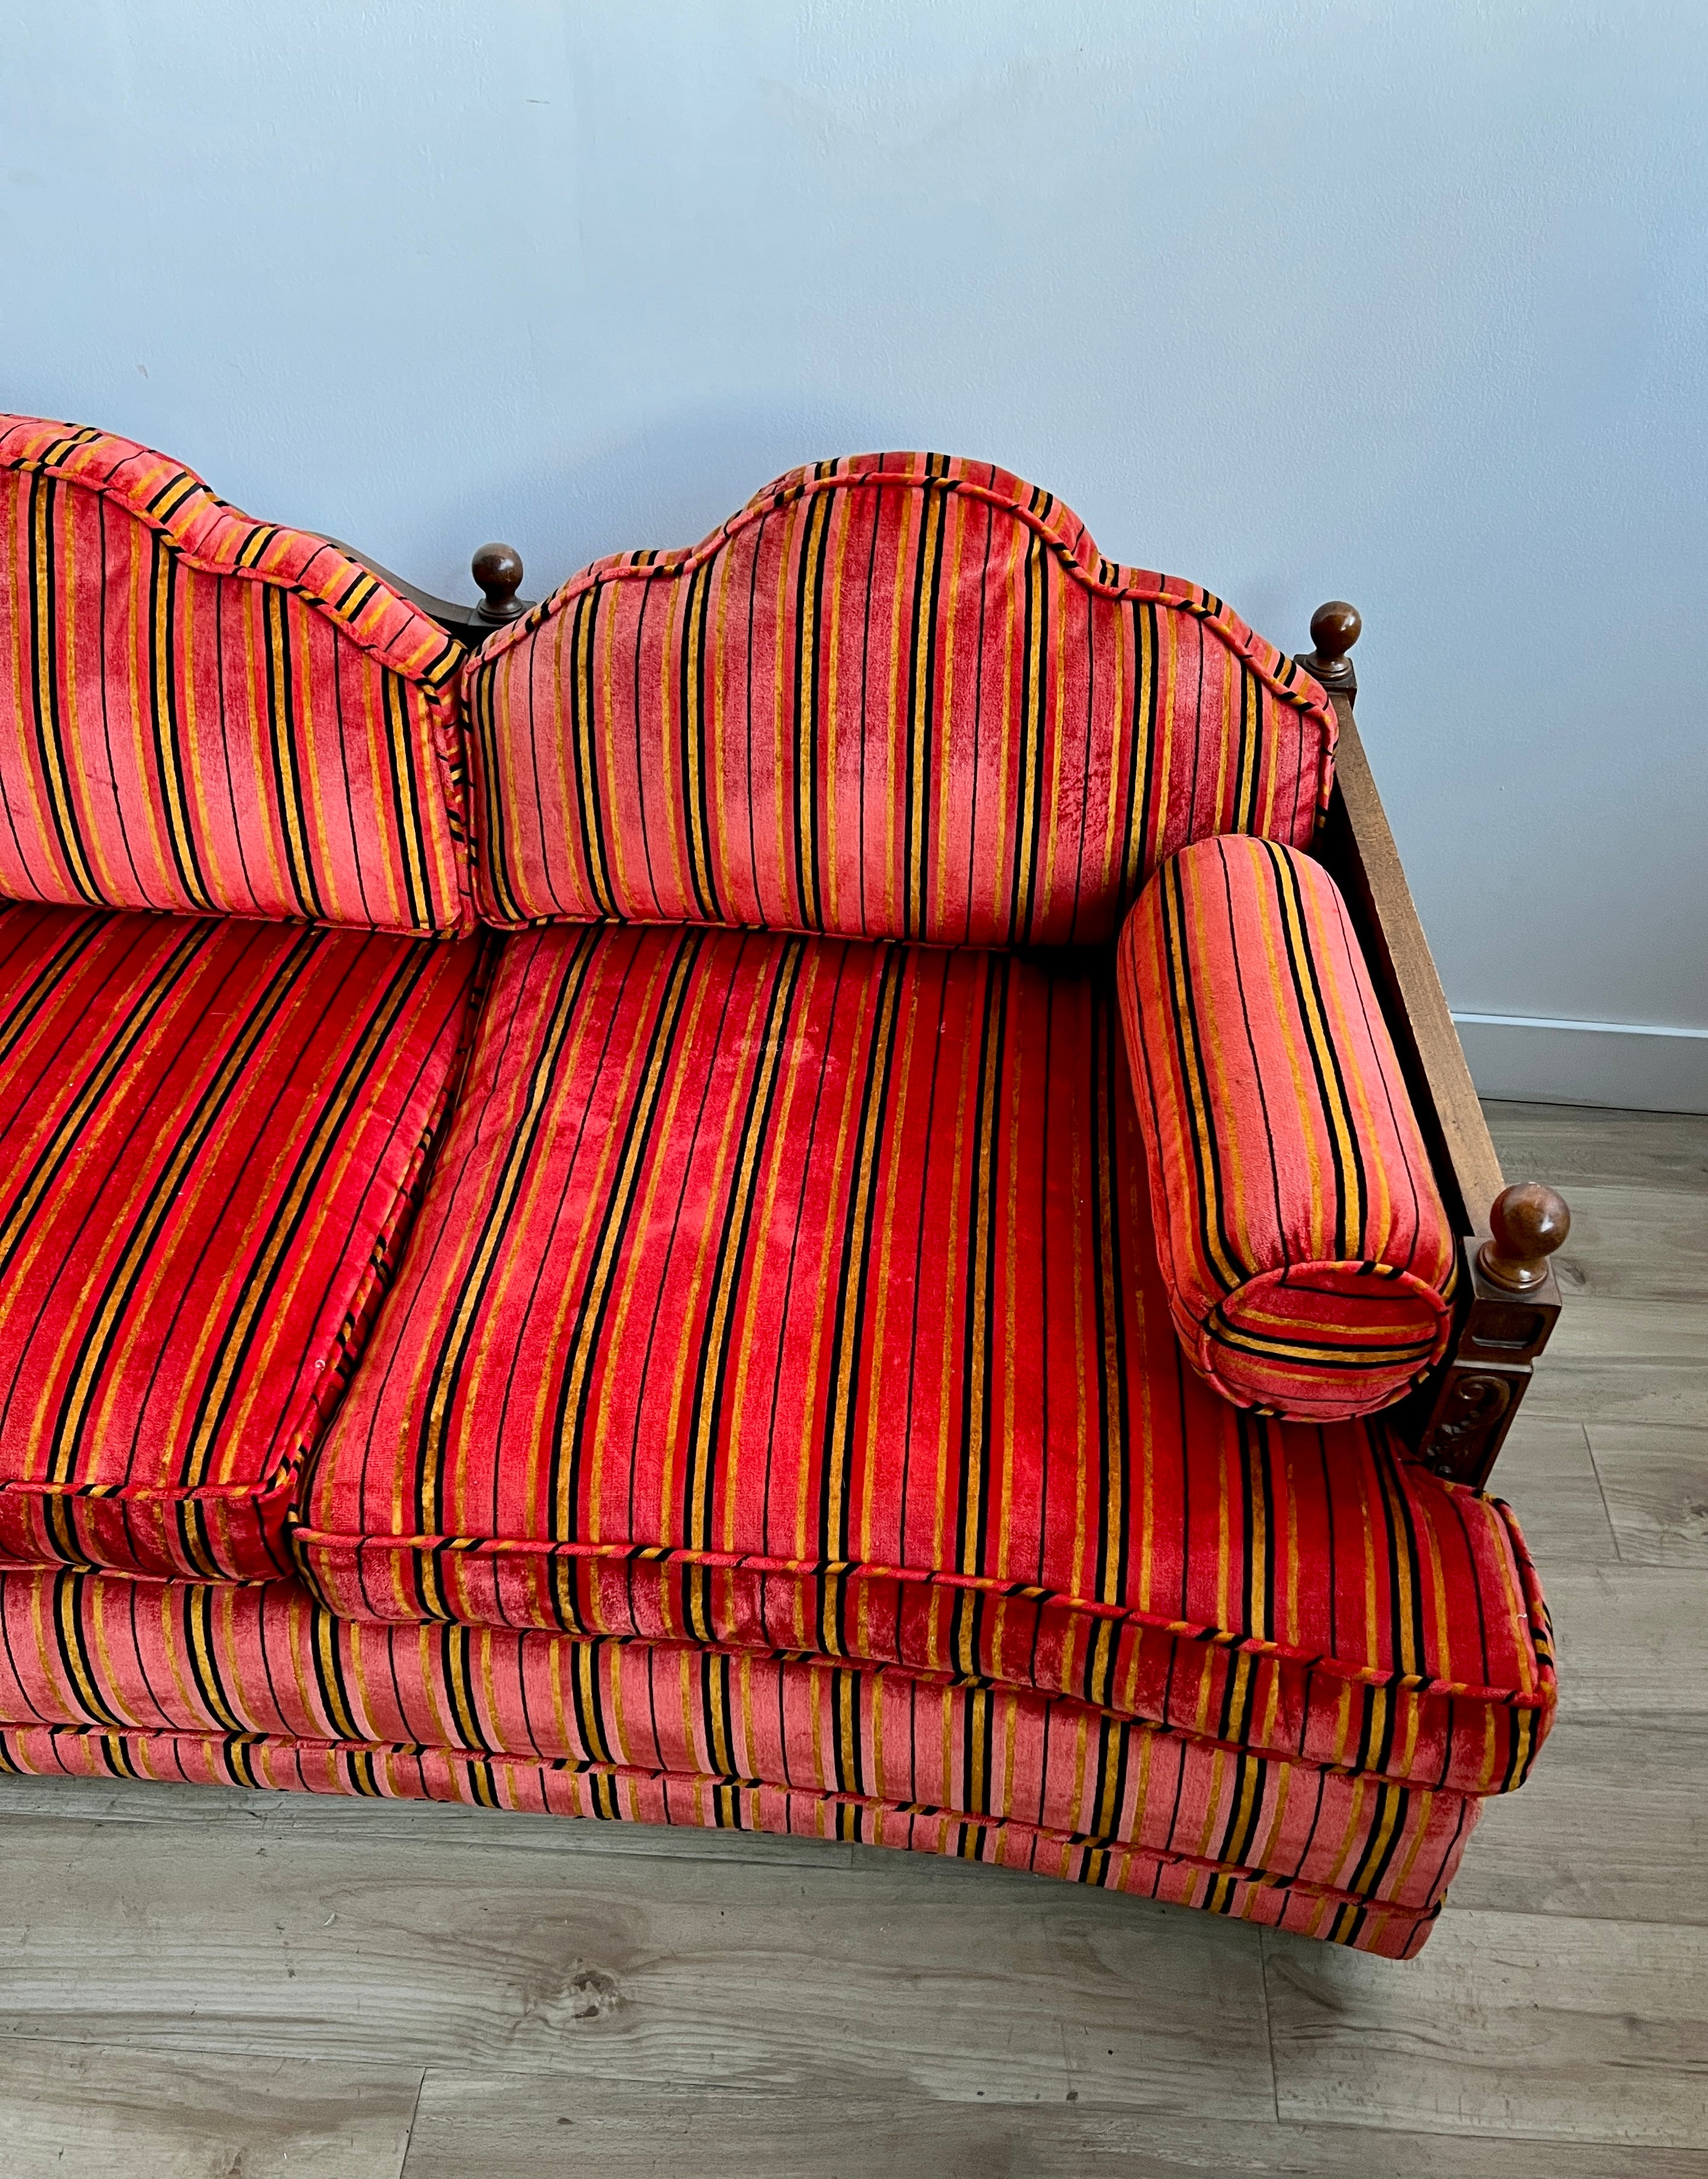 Vintage Moroccan Style Red Velvet Sofa